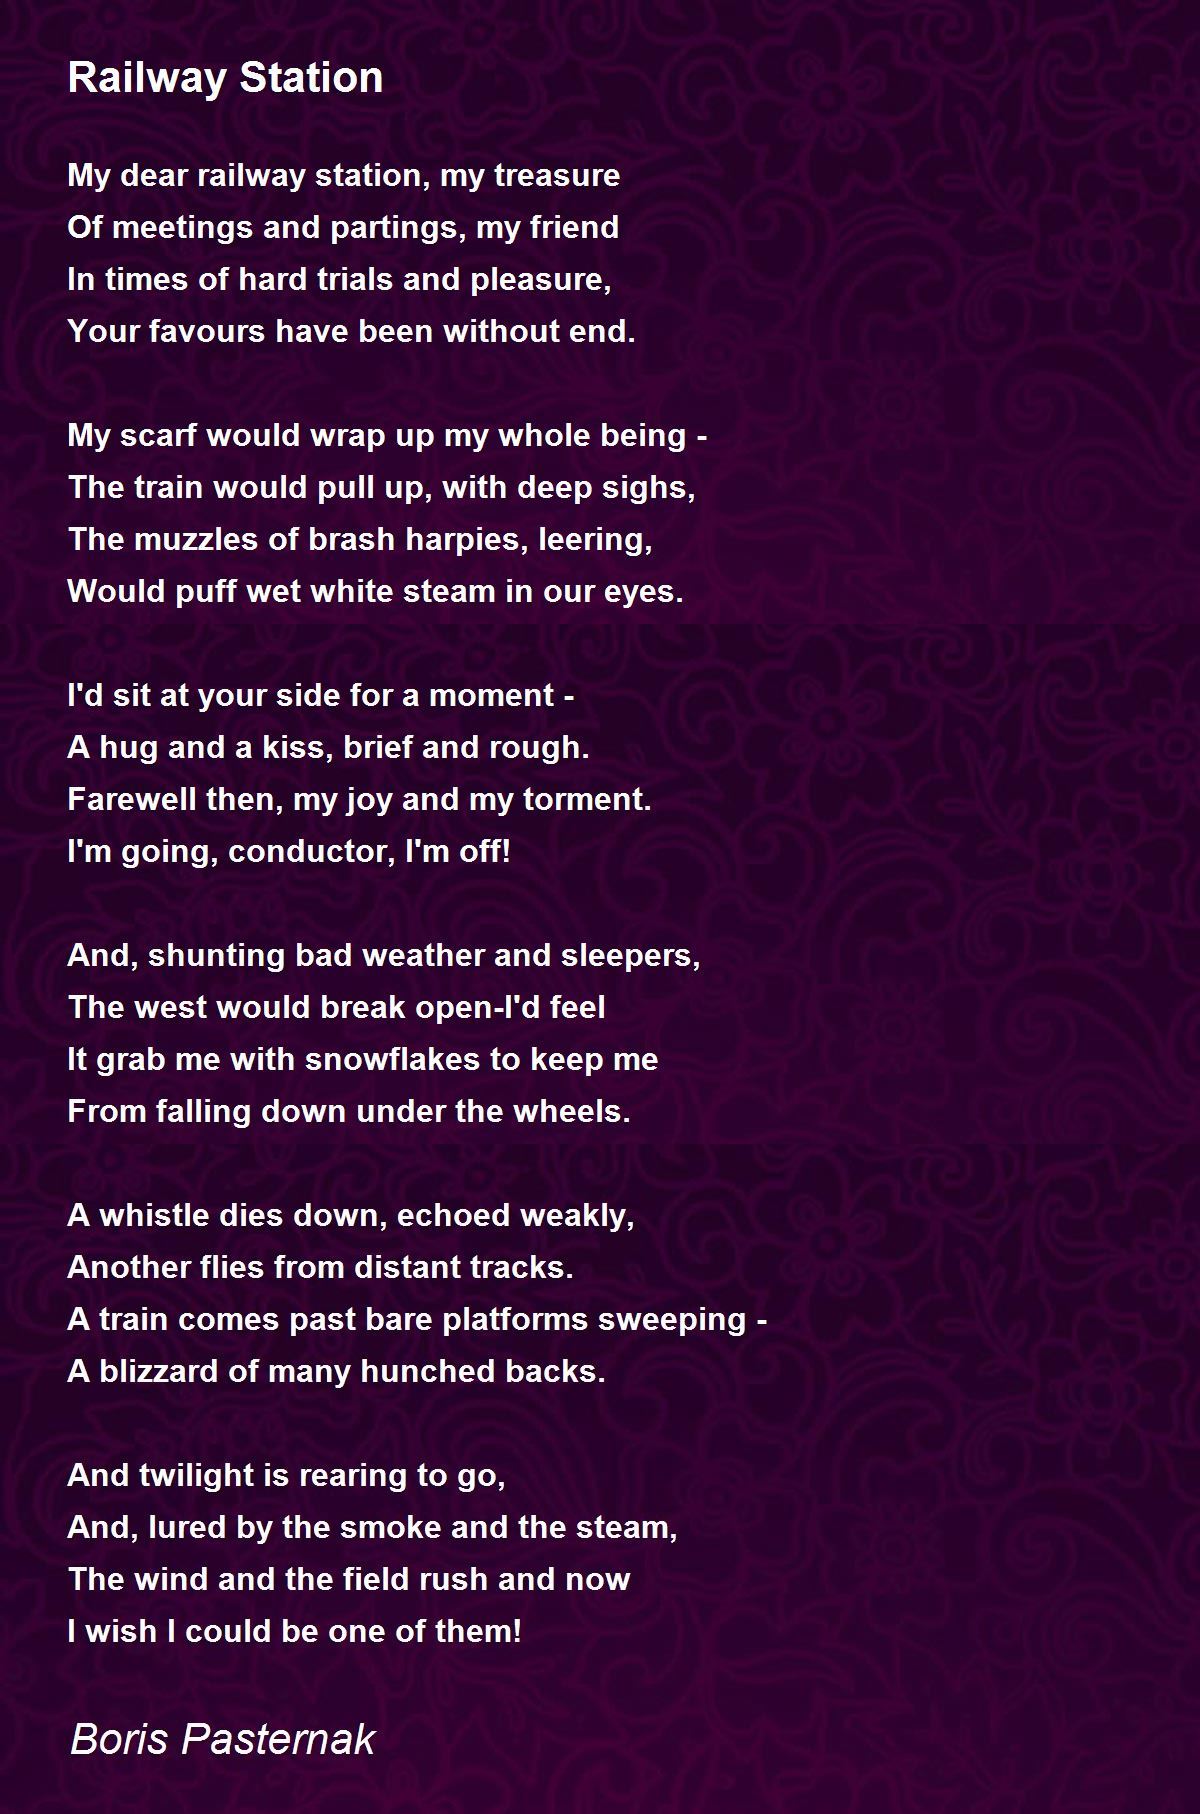 Railway Station Poem by Boris Pasternak - Poem Hunter